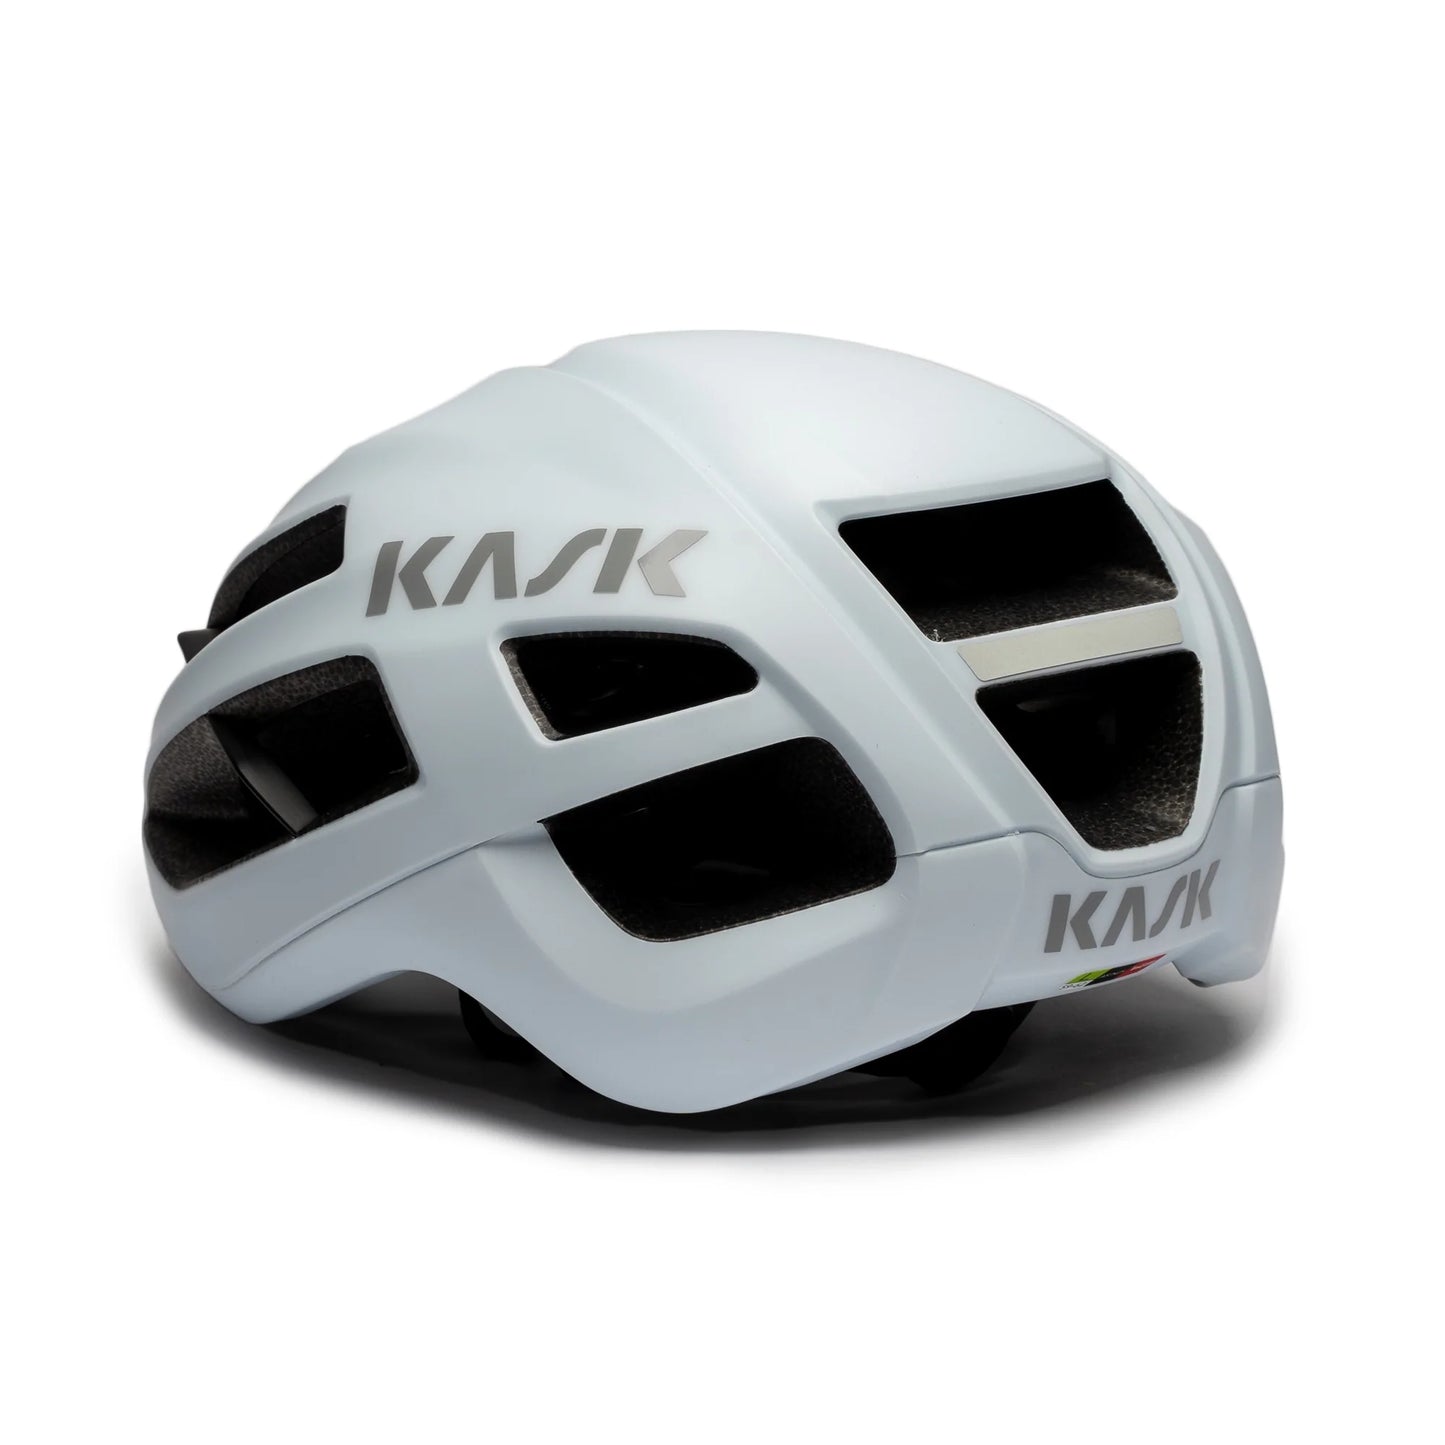 KASK Protone - Ropa ciclismo